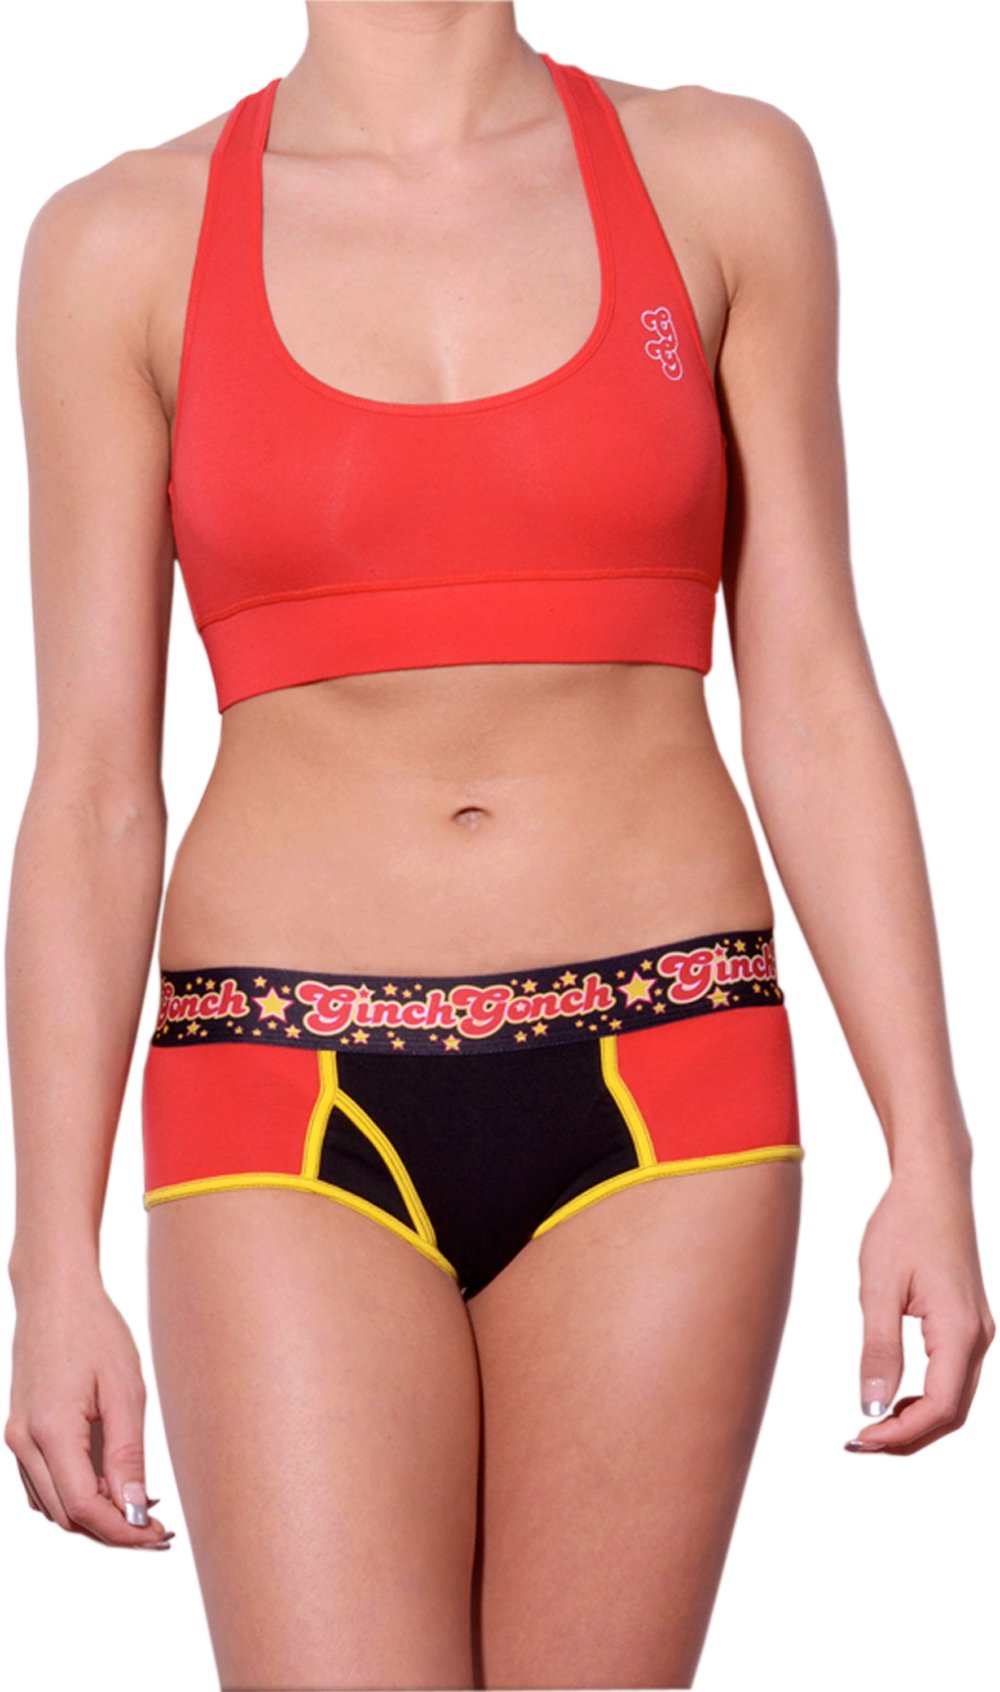 Atomic Fireballs boy cut Brief Women's Underwear Red and Black panels yellow trim printed waistband front